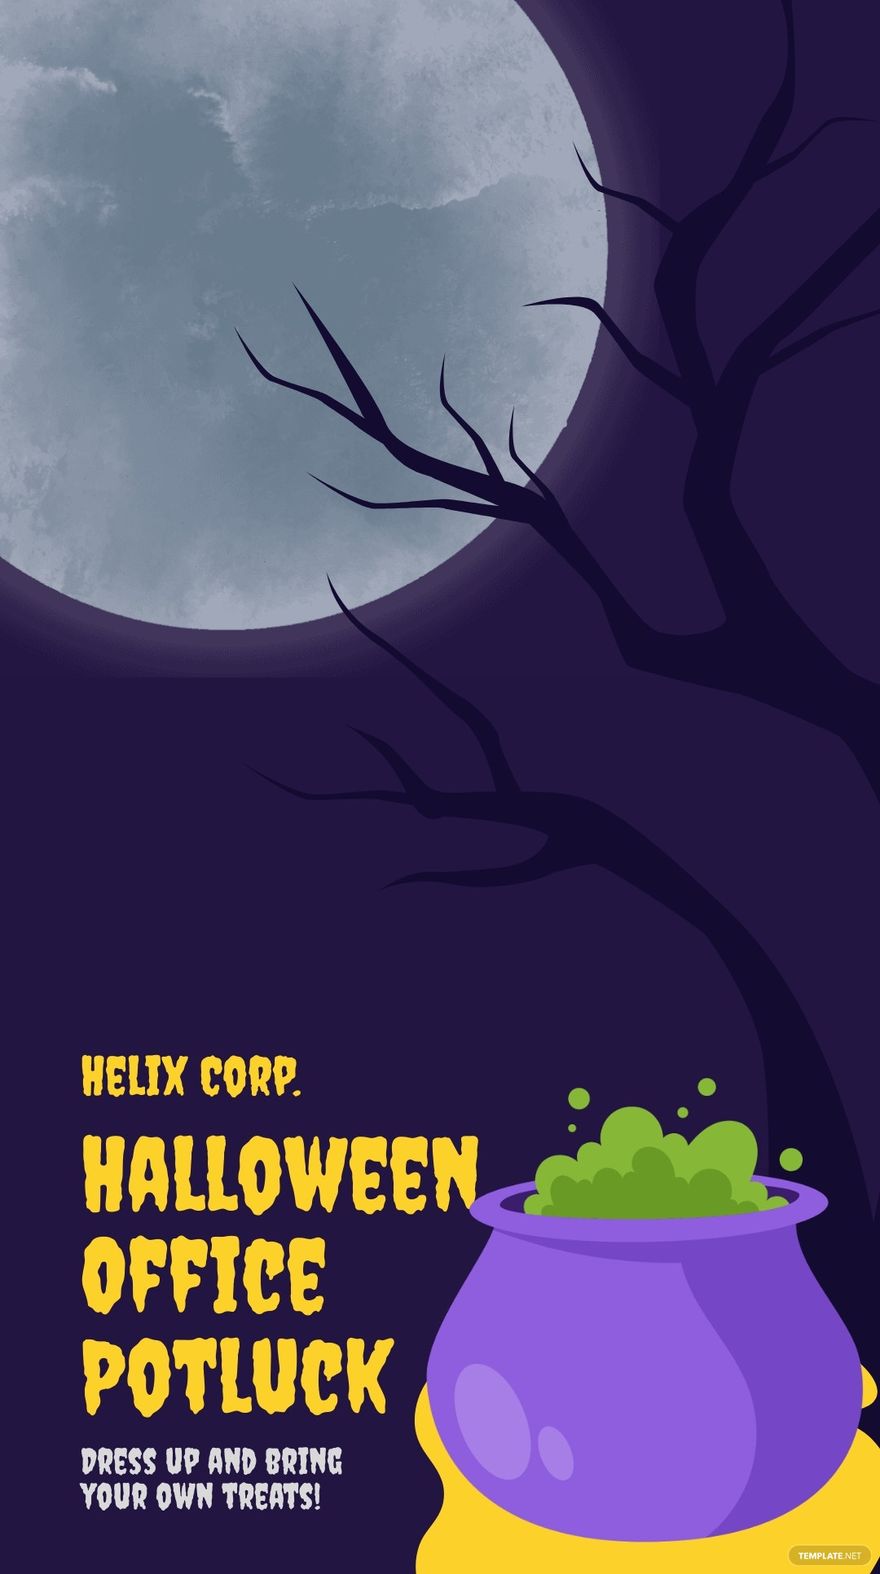 Free Halloween Potluck Snapchat Geofilter Template